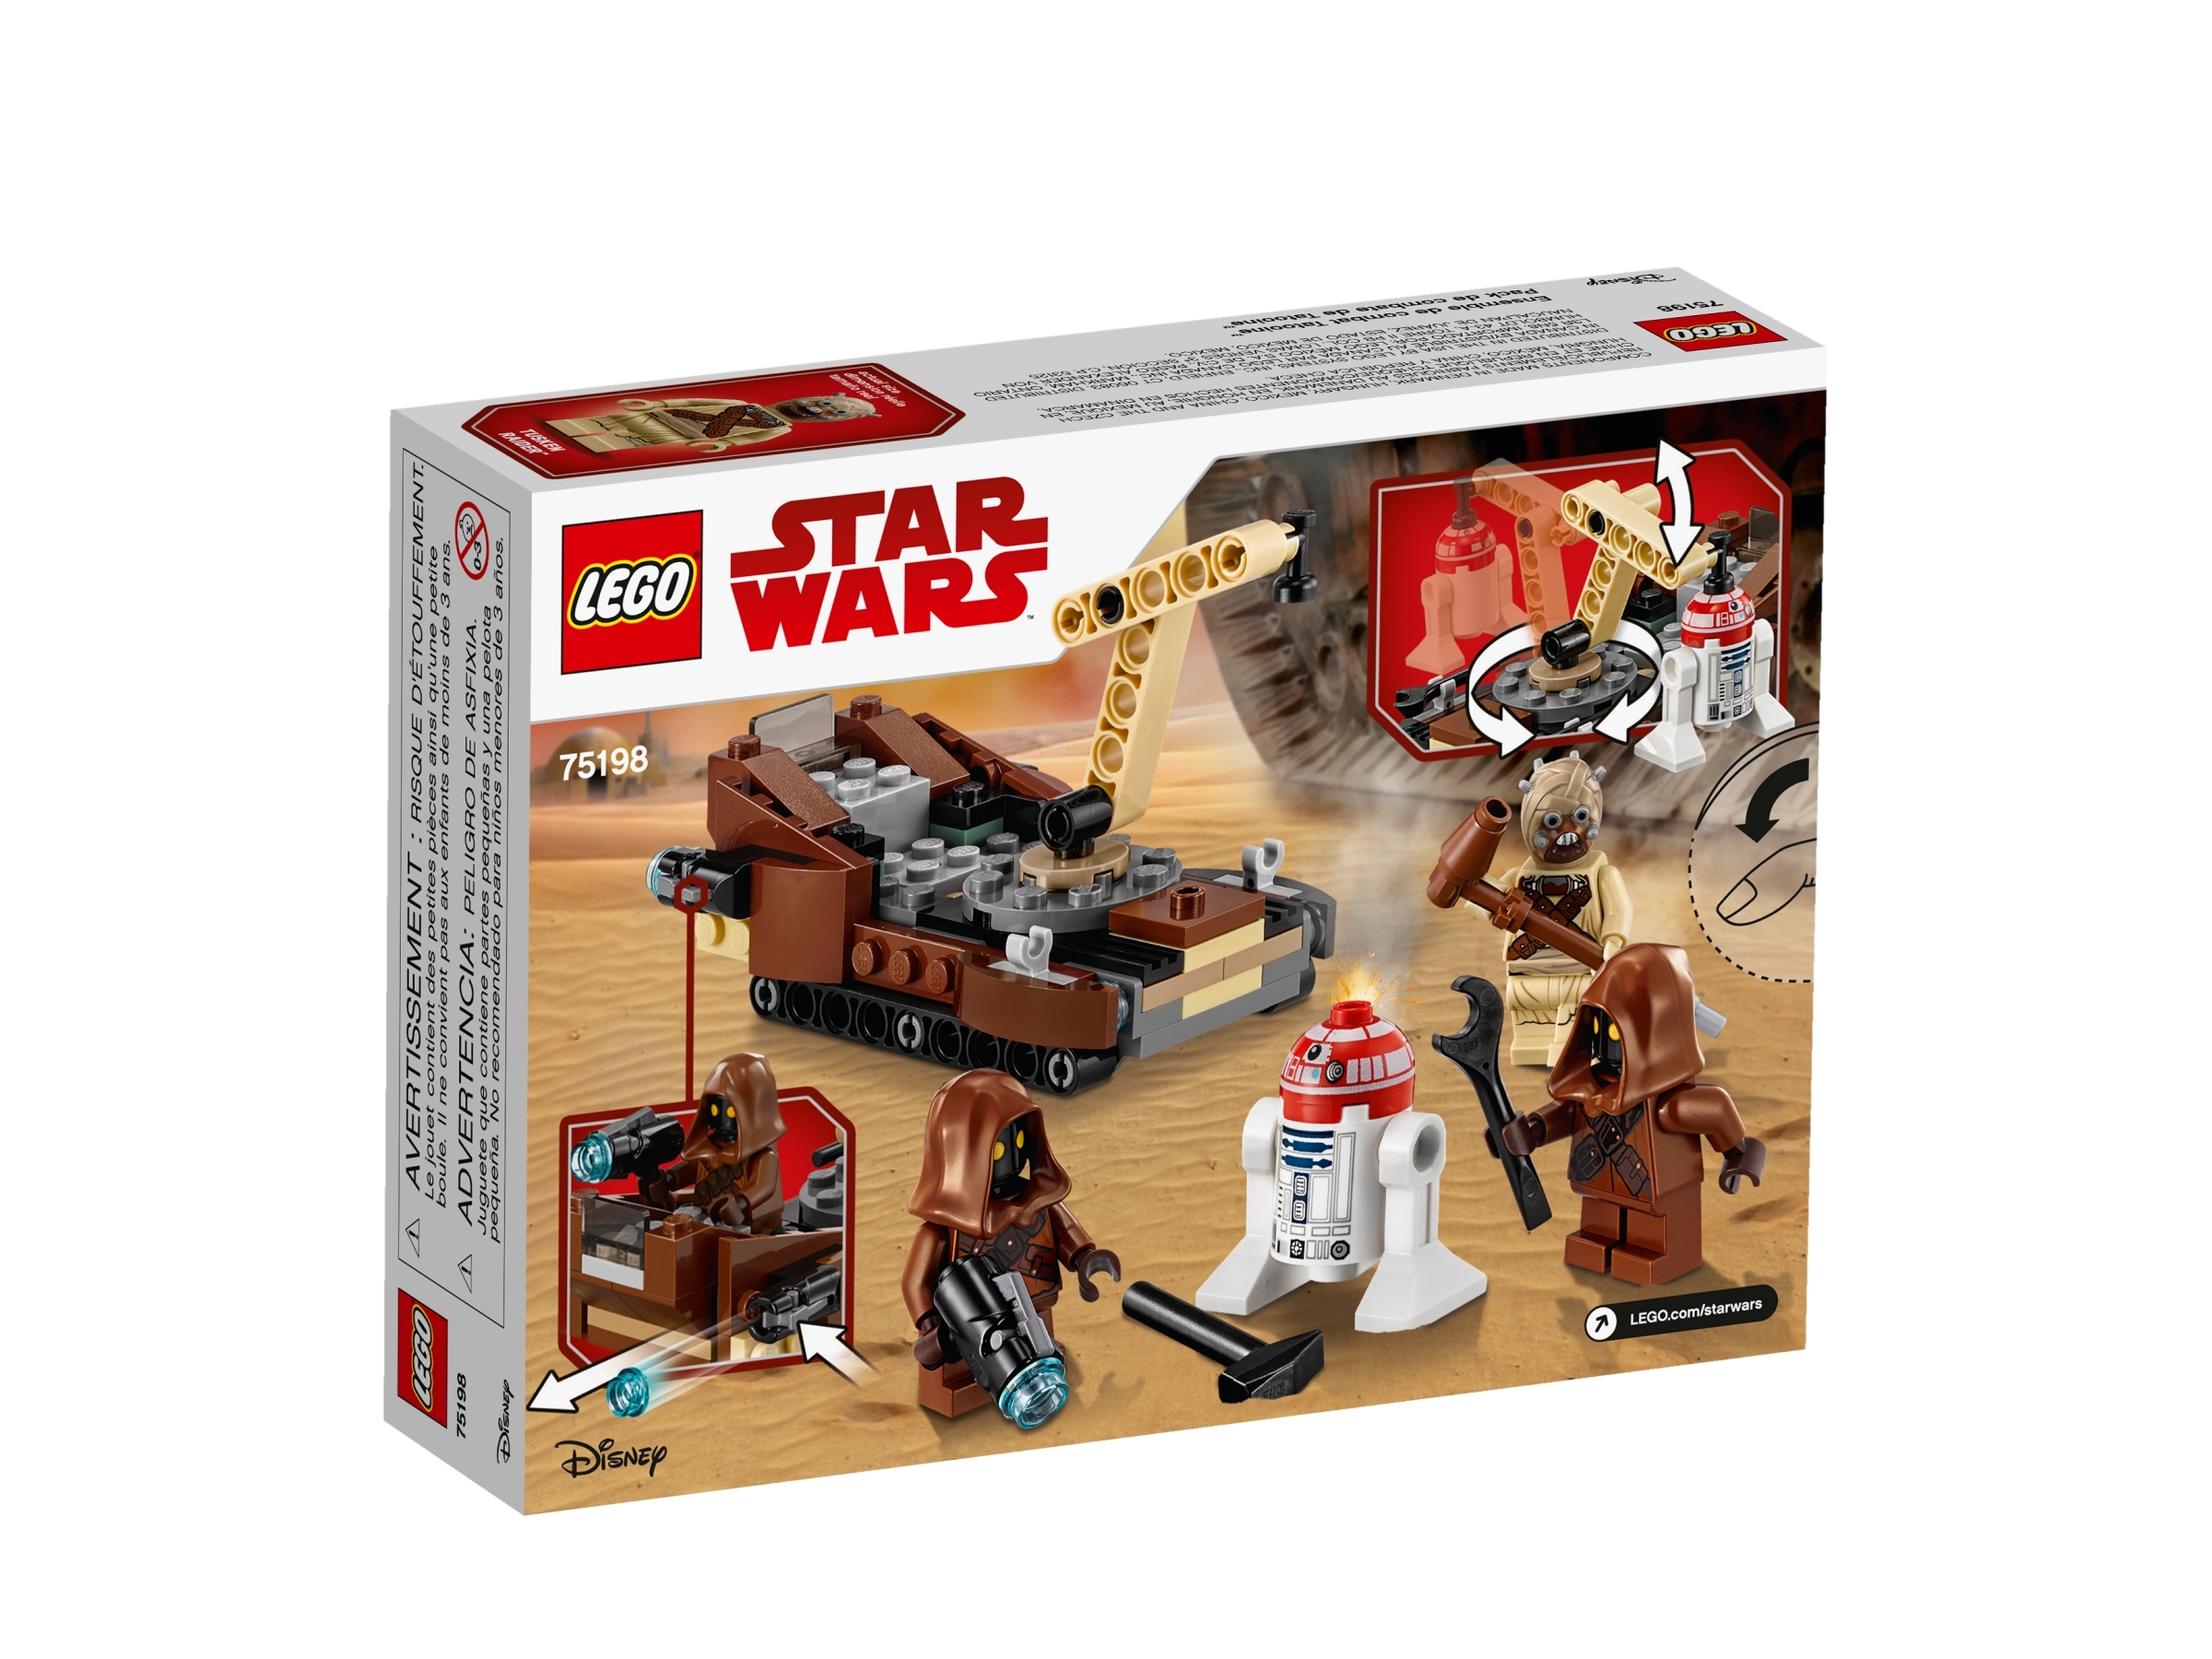 Neuf Lego Star Wars Jawa 2018 Star Wars Set 75198 